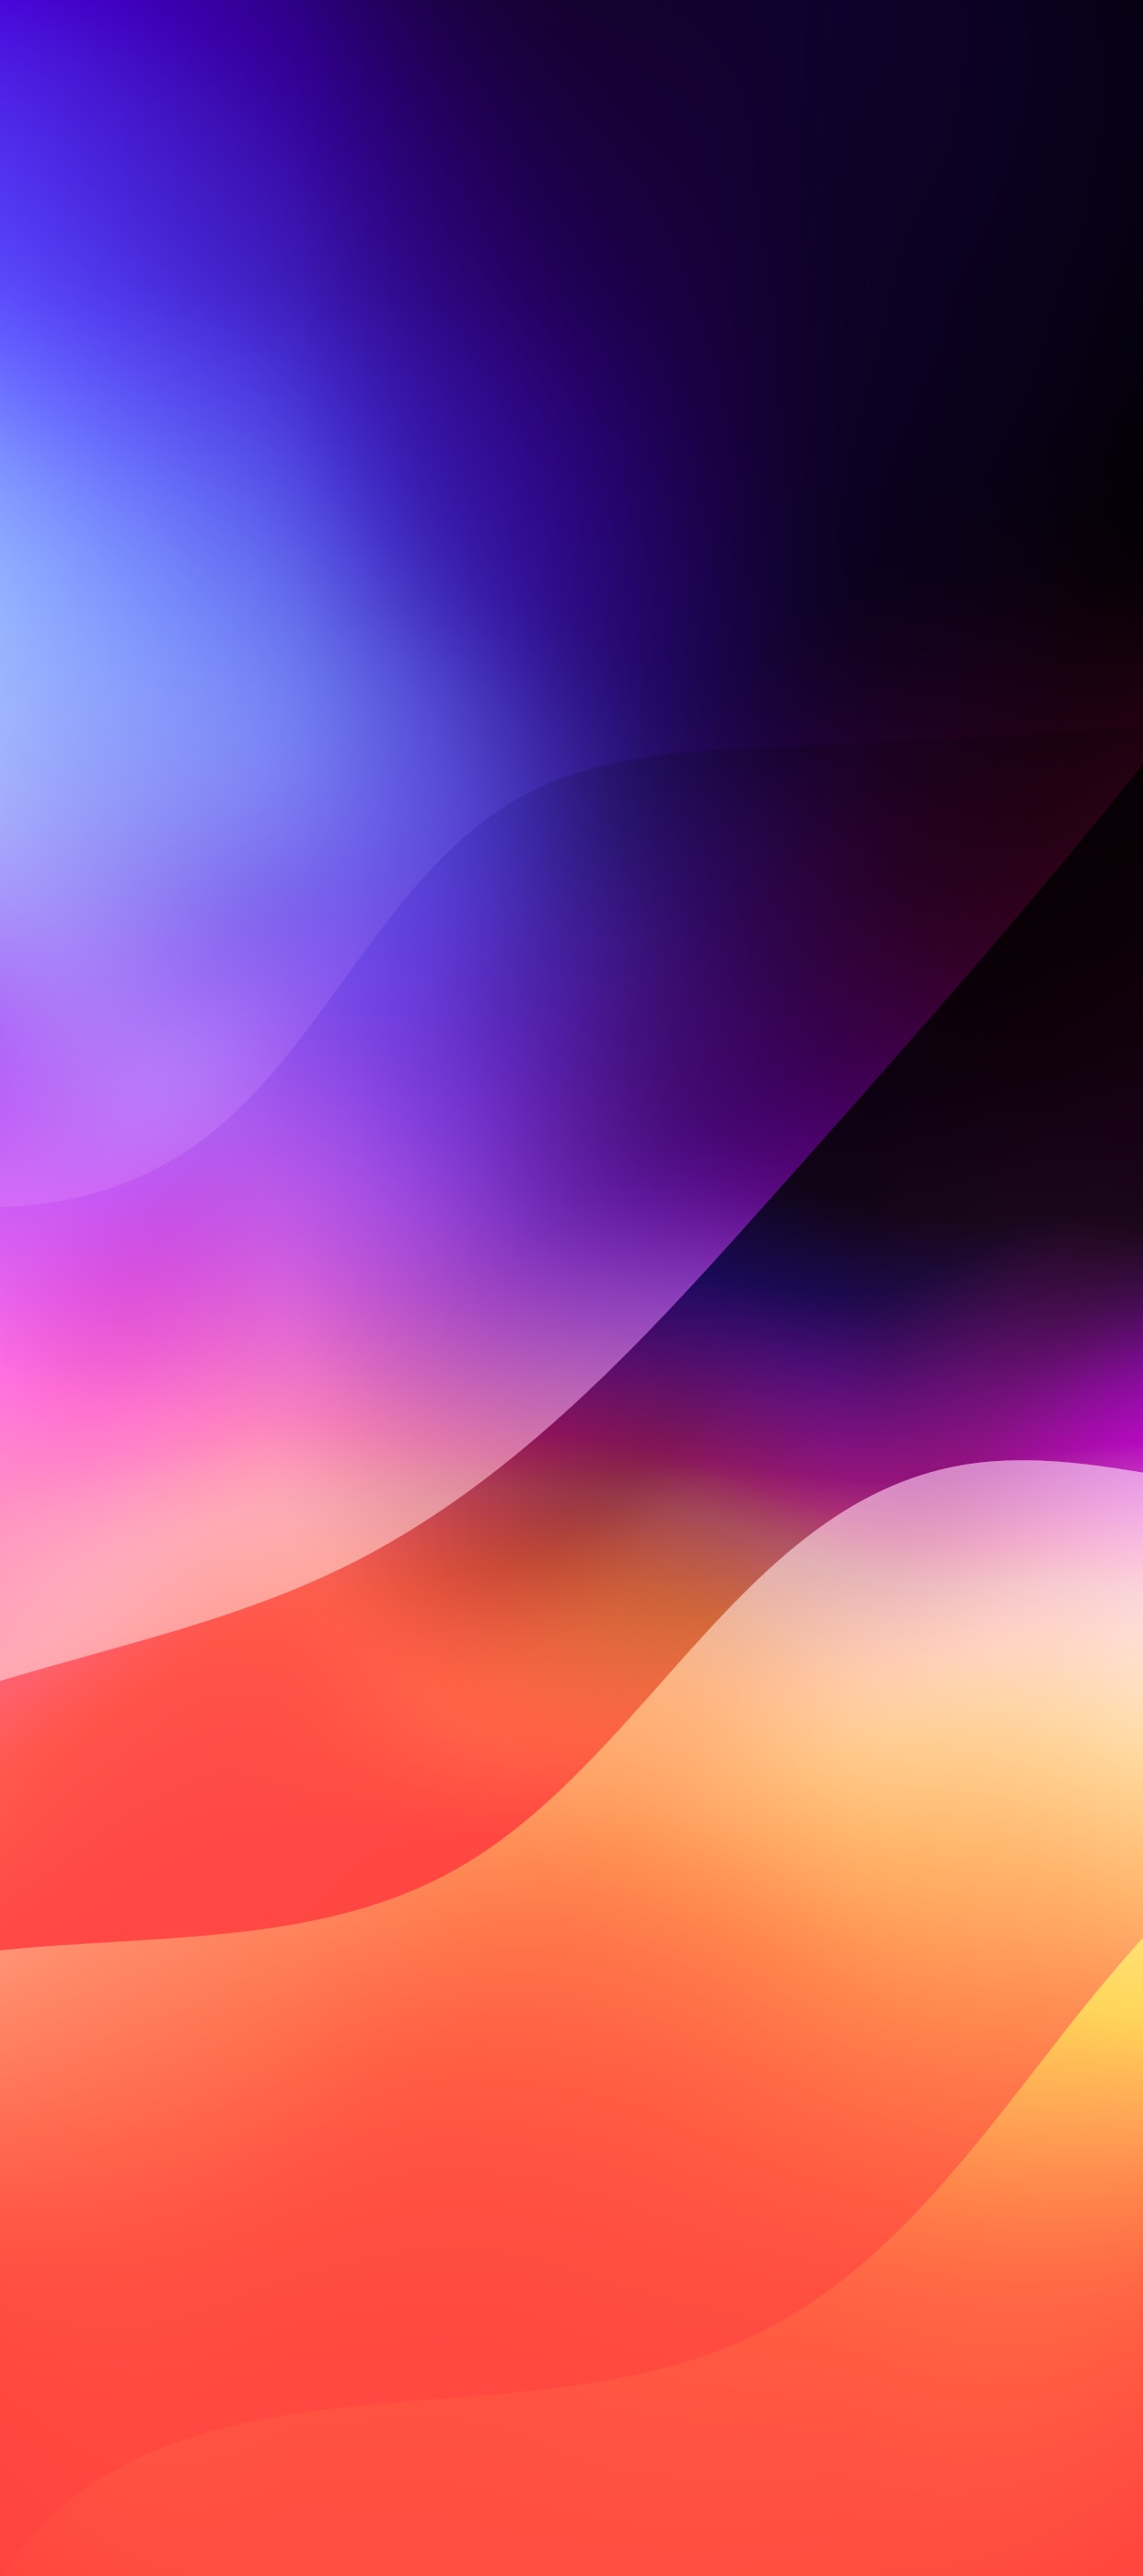 Purple Orange Gradient Waves wallpaper for Apple iPhone, Mac, iPad and more